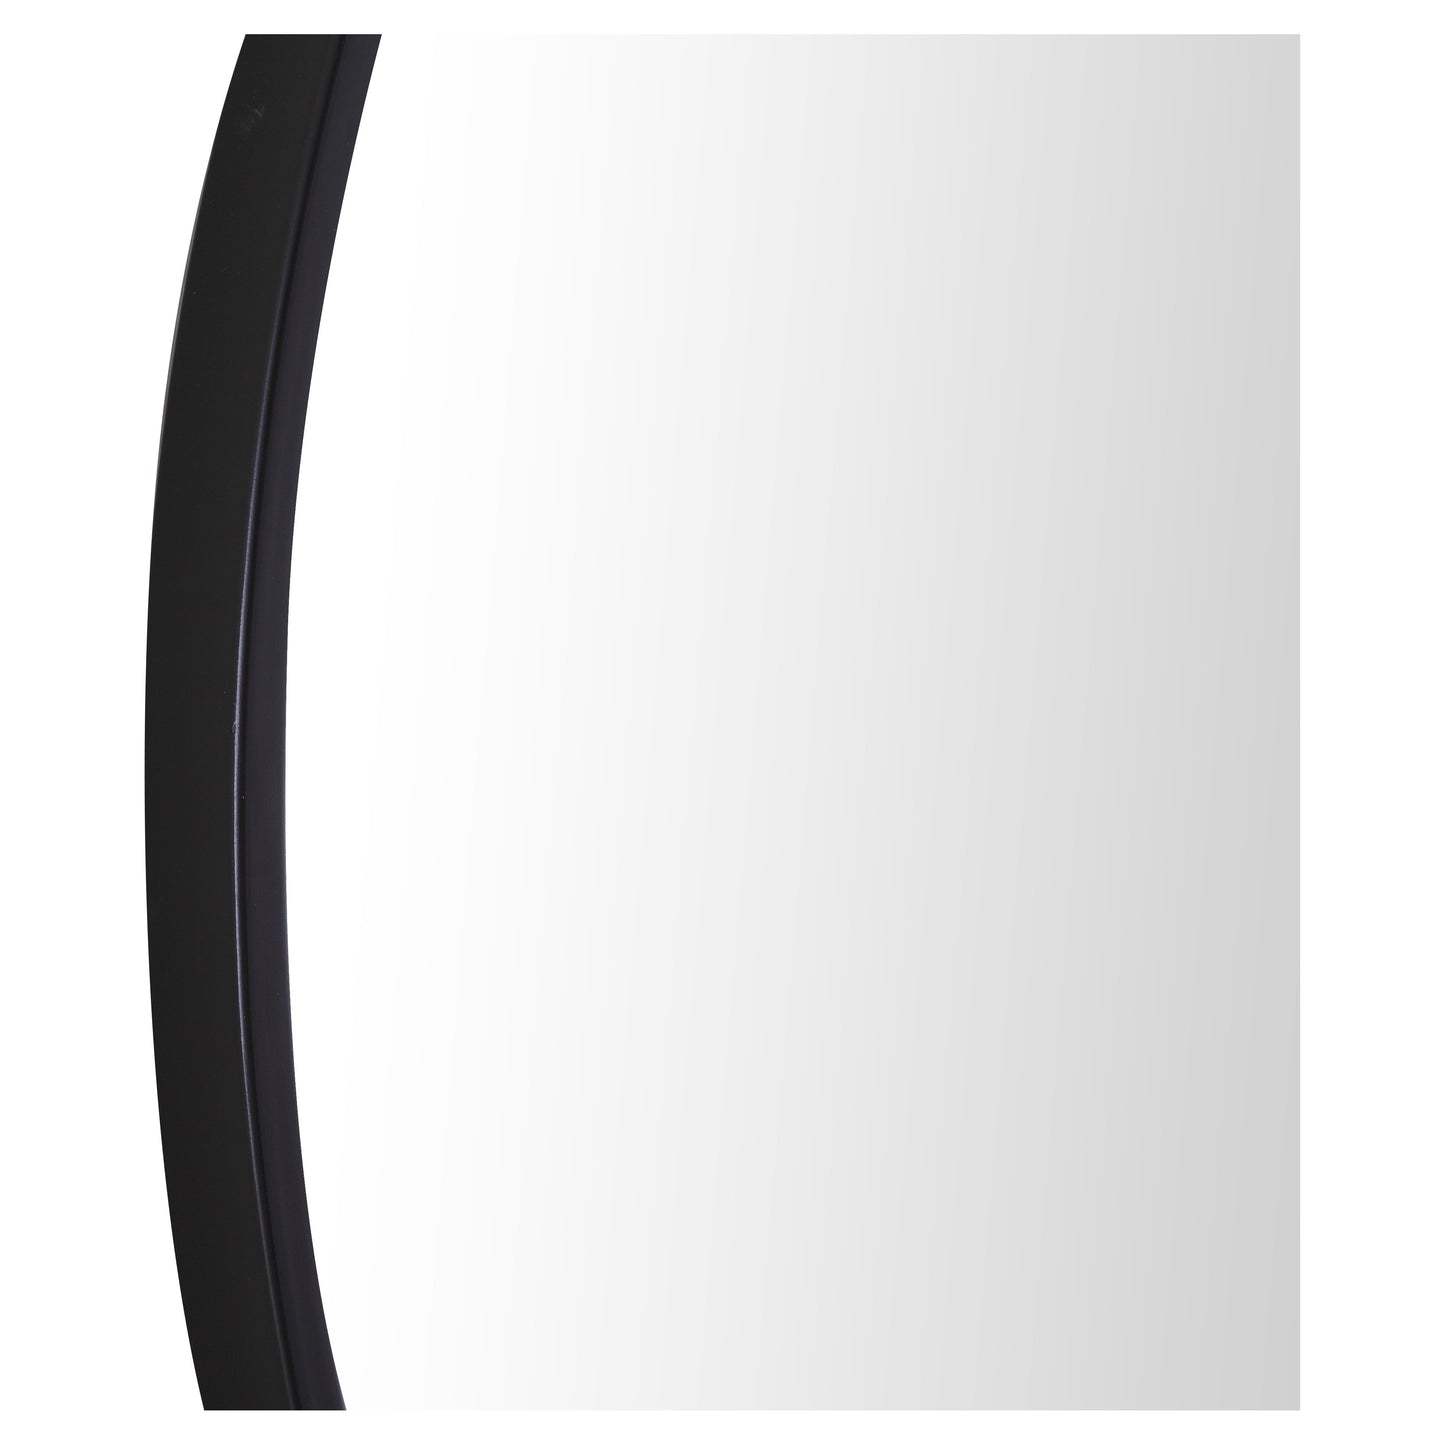 MR4034BK Eternity 28" x 28" Metal Framed Round Mirror in Black